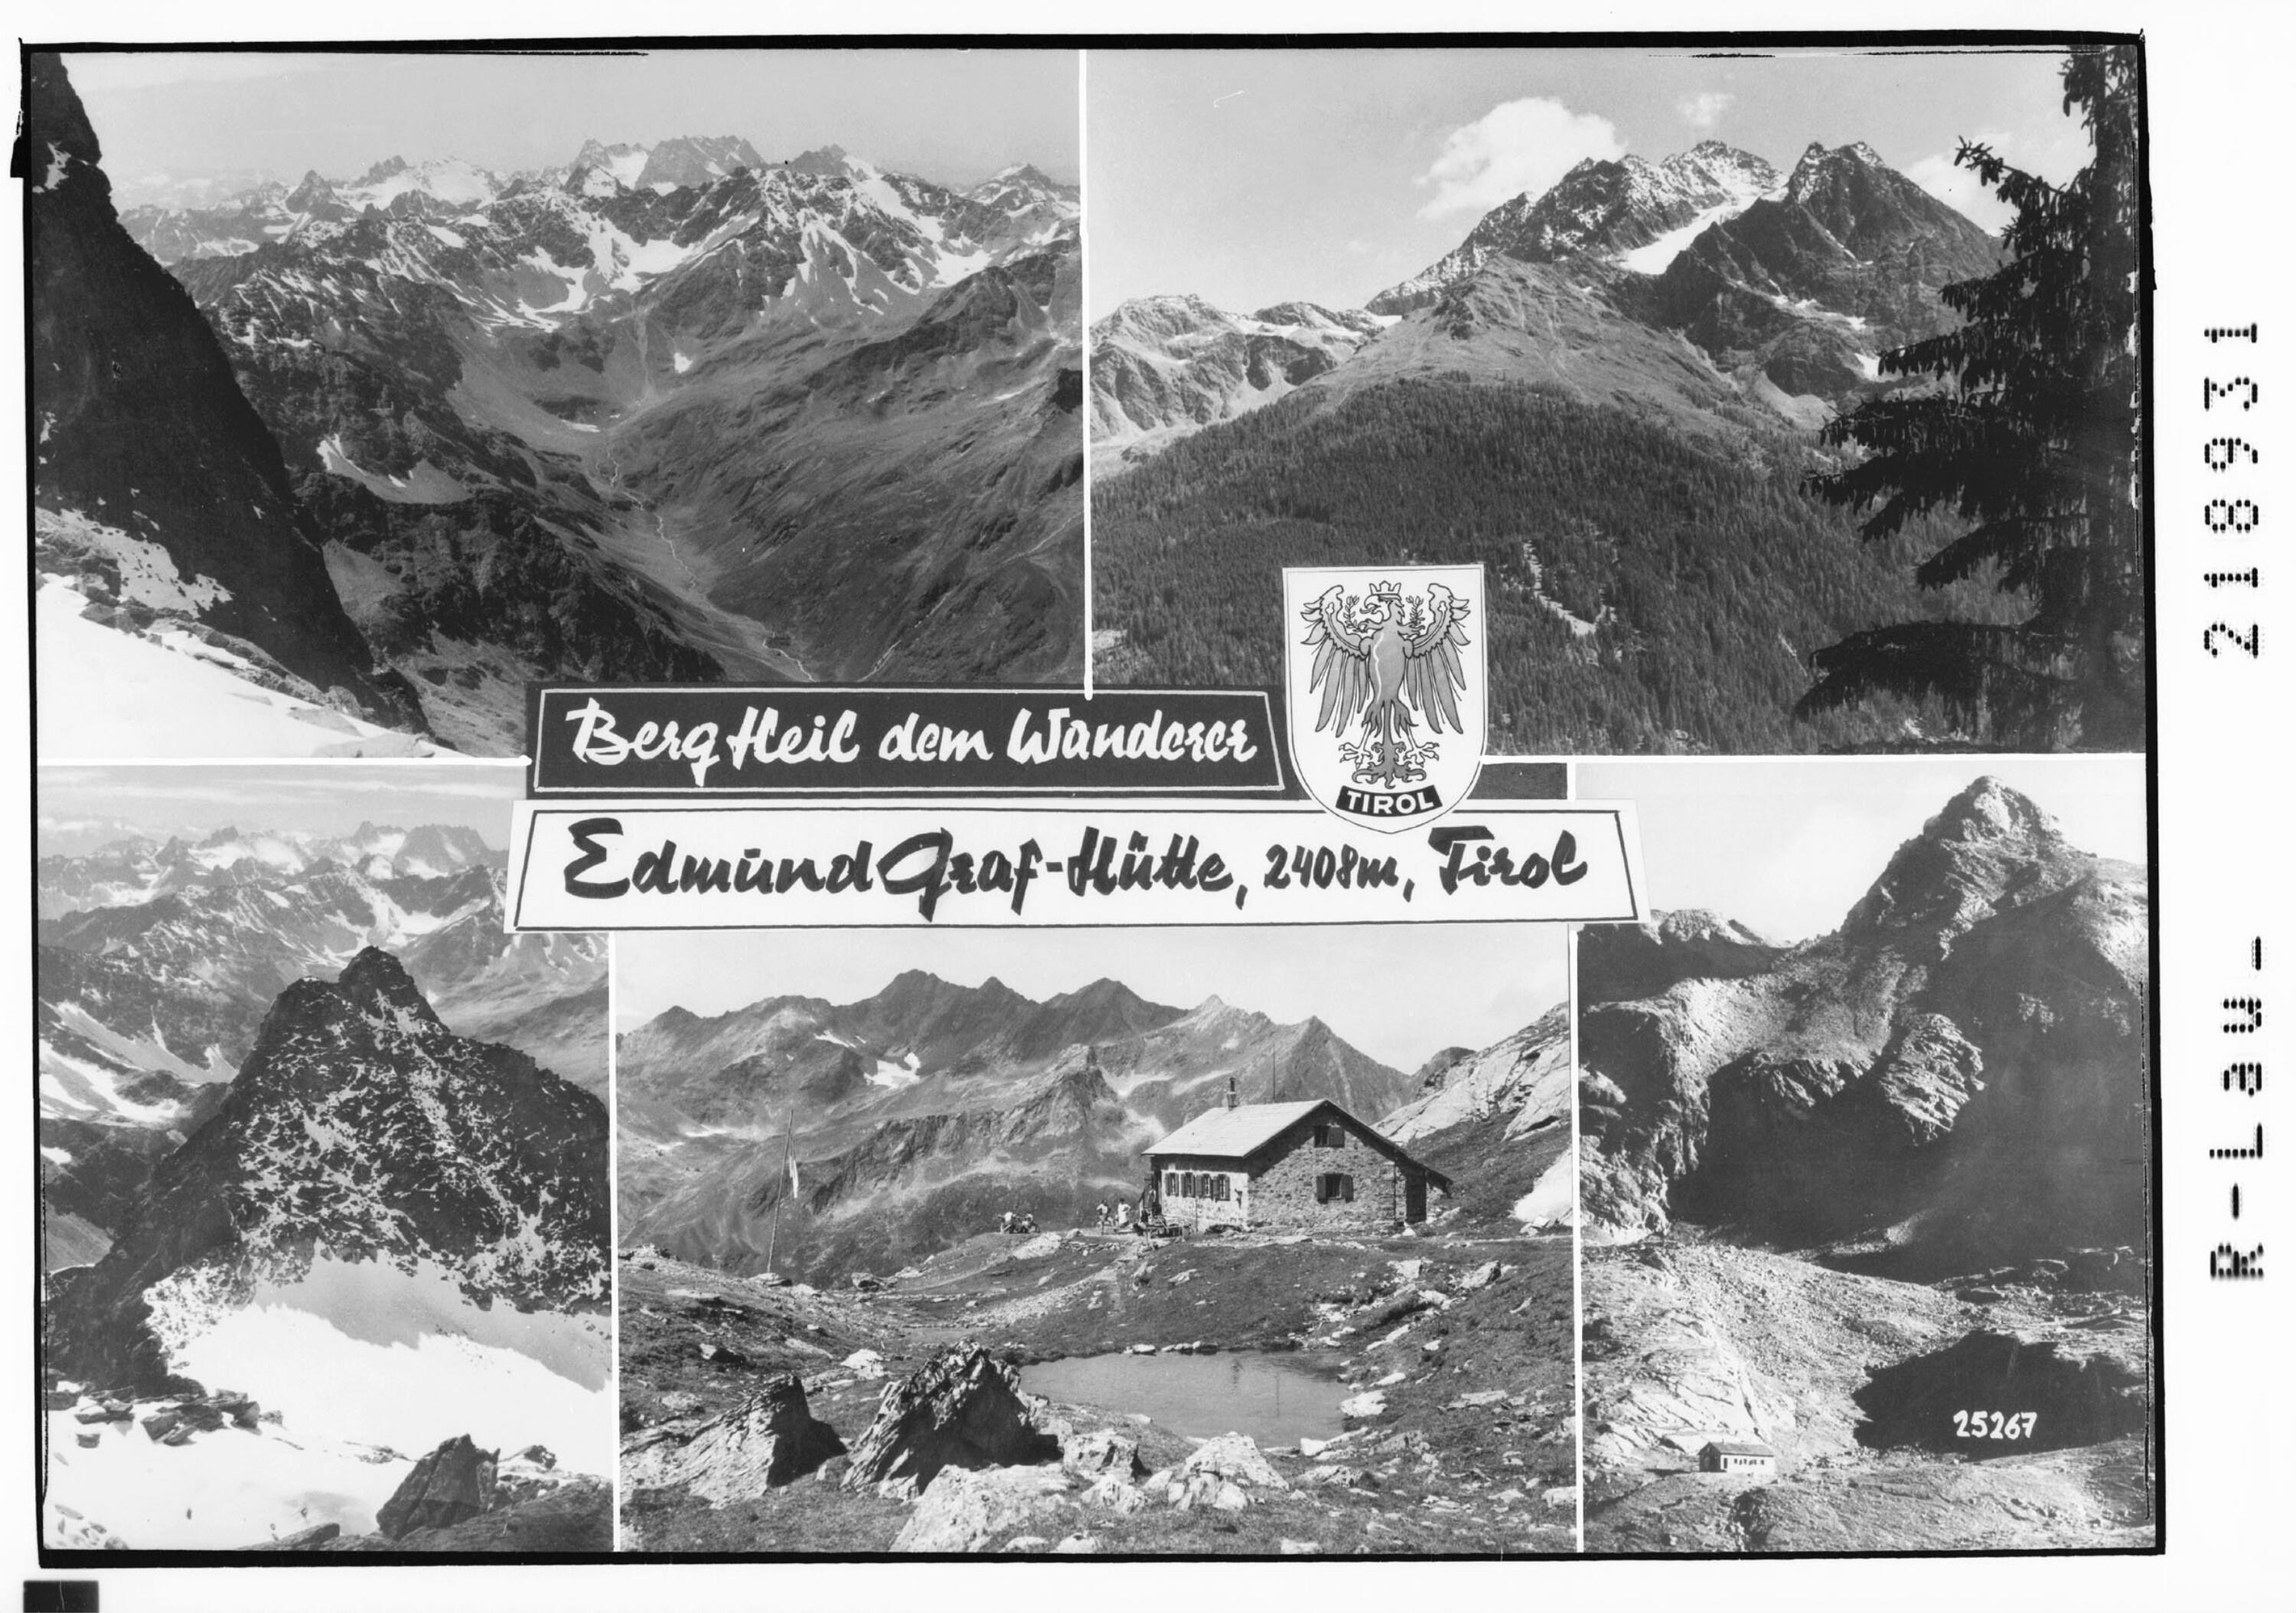 Berg Heil dem Wanderer Edmund Graf - Hütte 2408 m, Tirol></div>


    <hr>
    <div class=